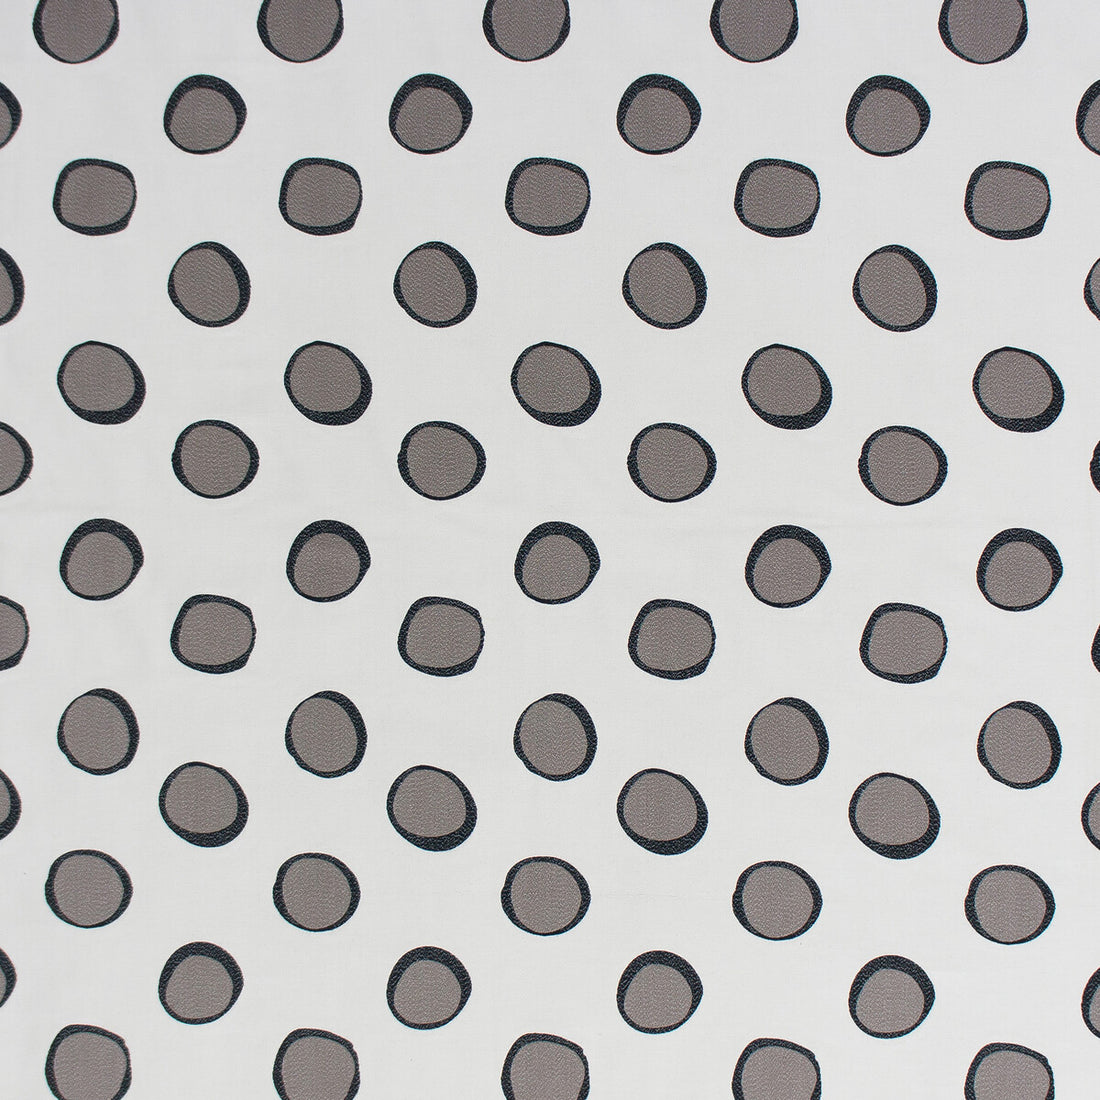 Solis fabric in blanco/gris color - pattern GDT5587.001.0 - by Gaston y Daniela in the Gaston Nuevo Mundo collection